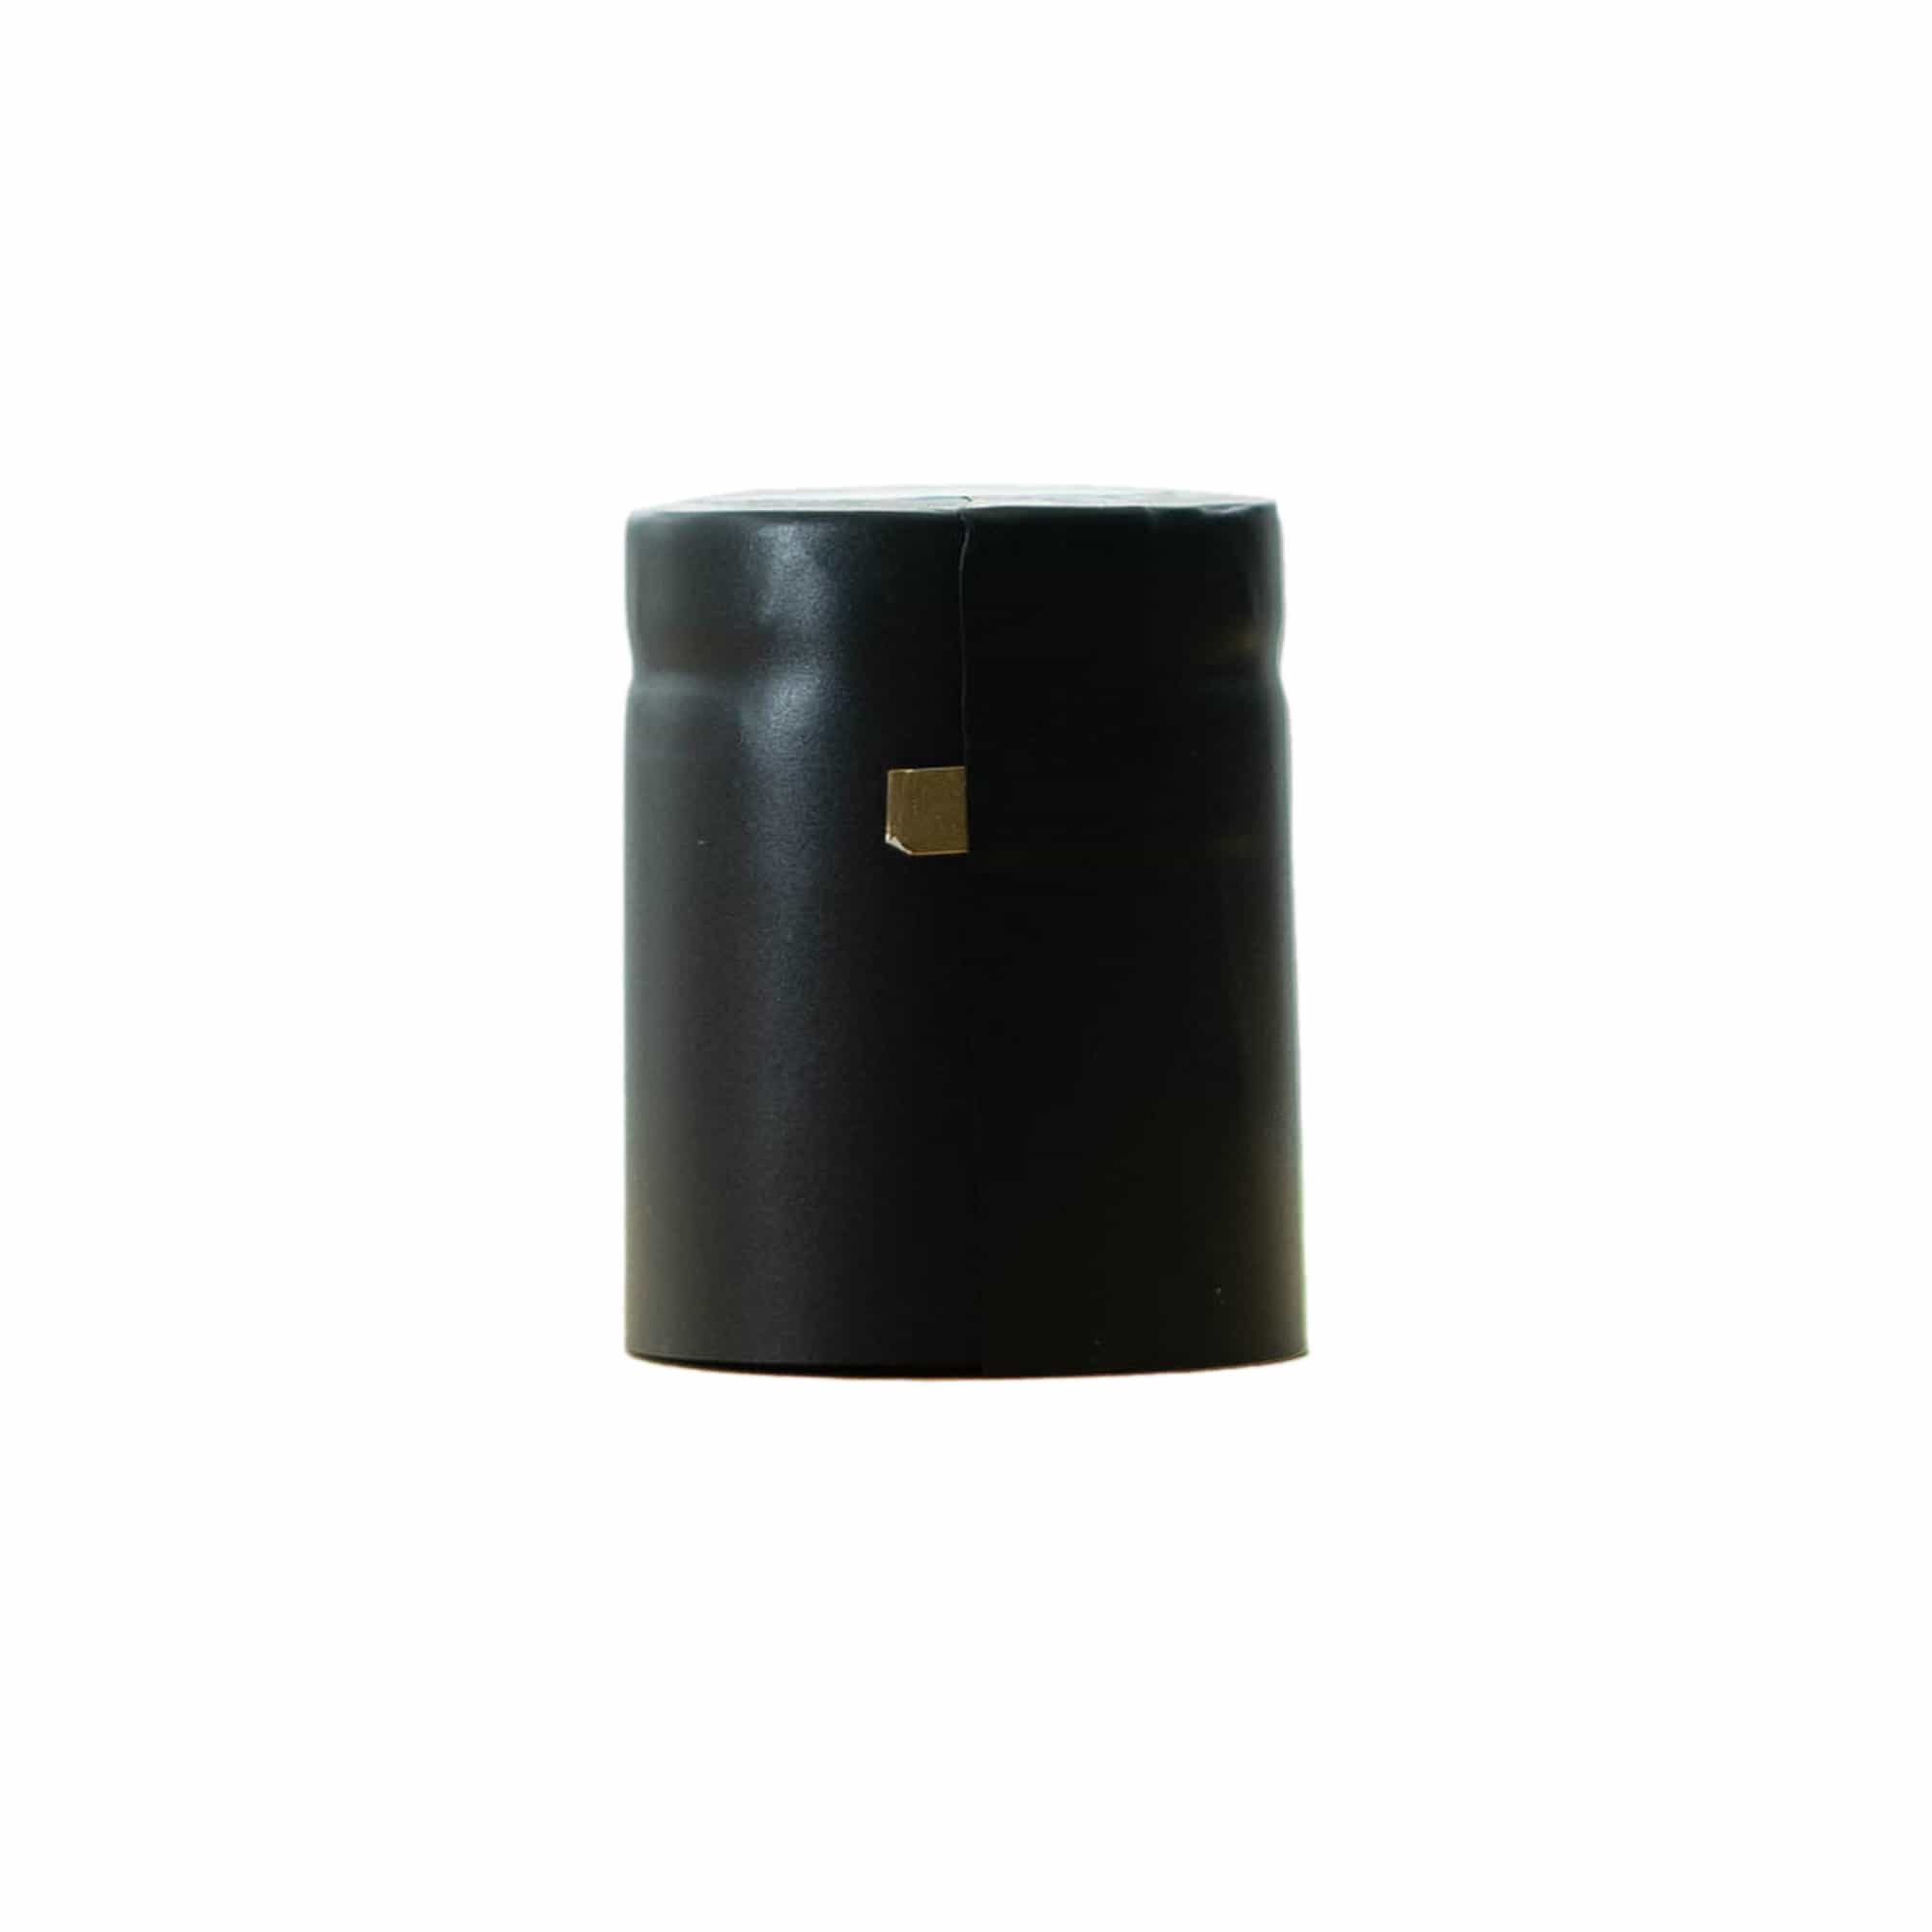 Krimpcapsule 32x41, pvc-kunststof, zwart